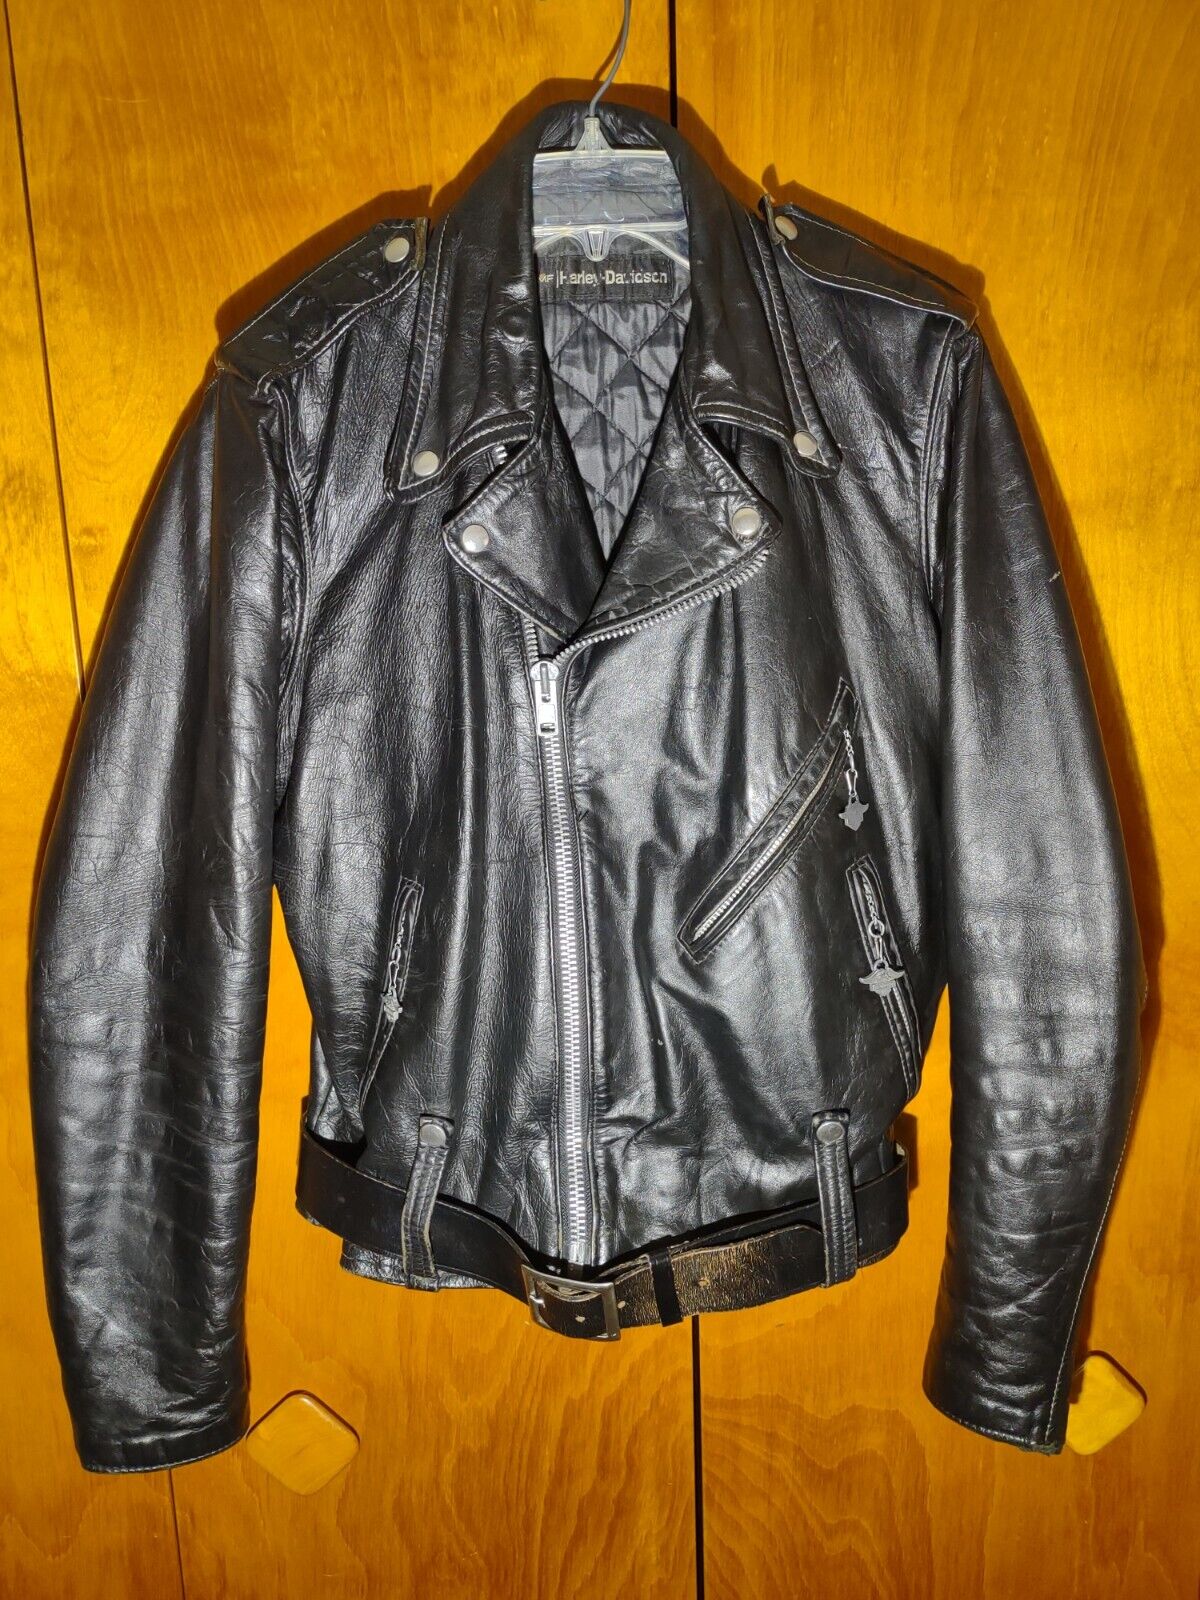 VTG AMF Harley Davidson Cycle Champ jacket - 4 Sided Stitched Label